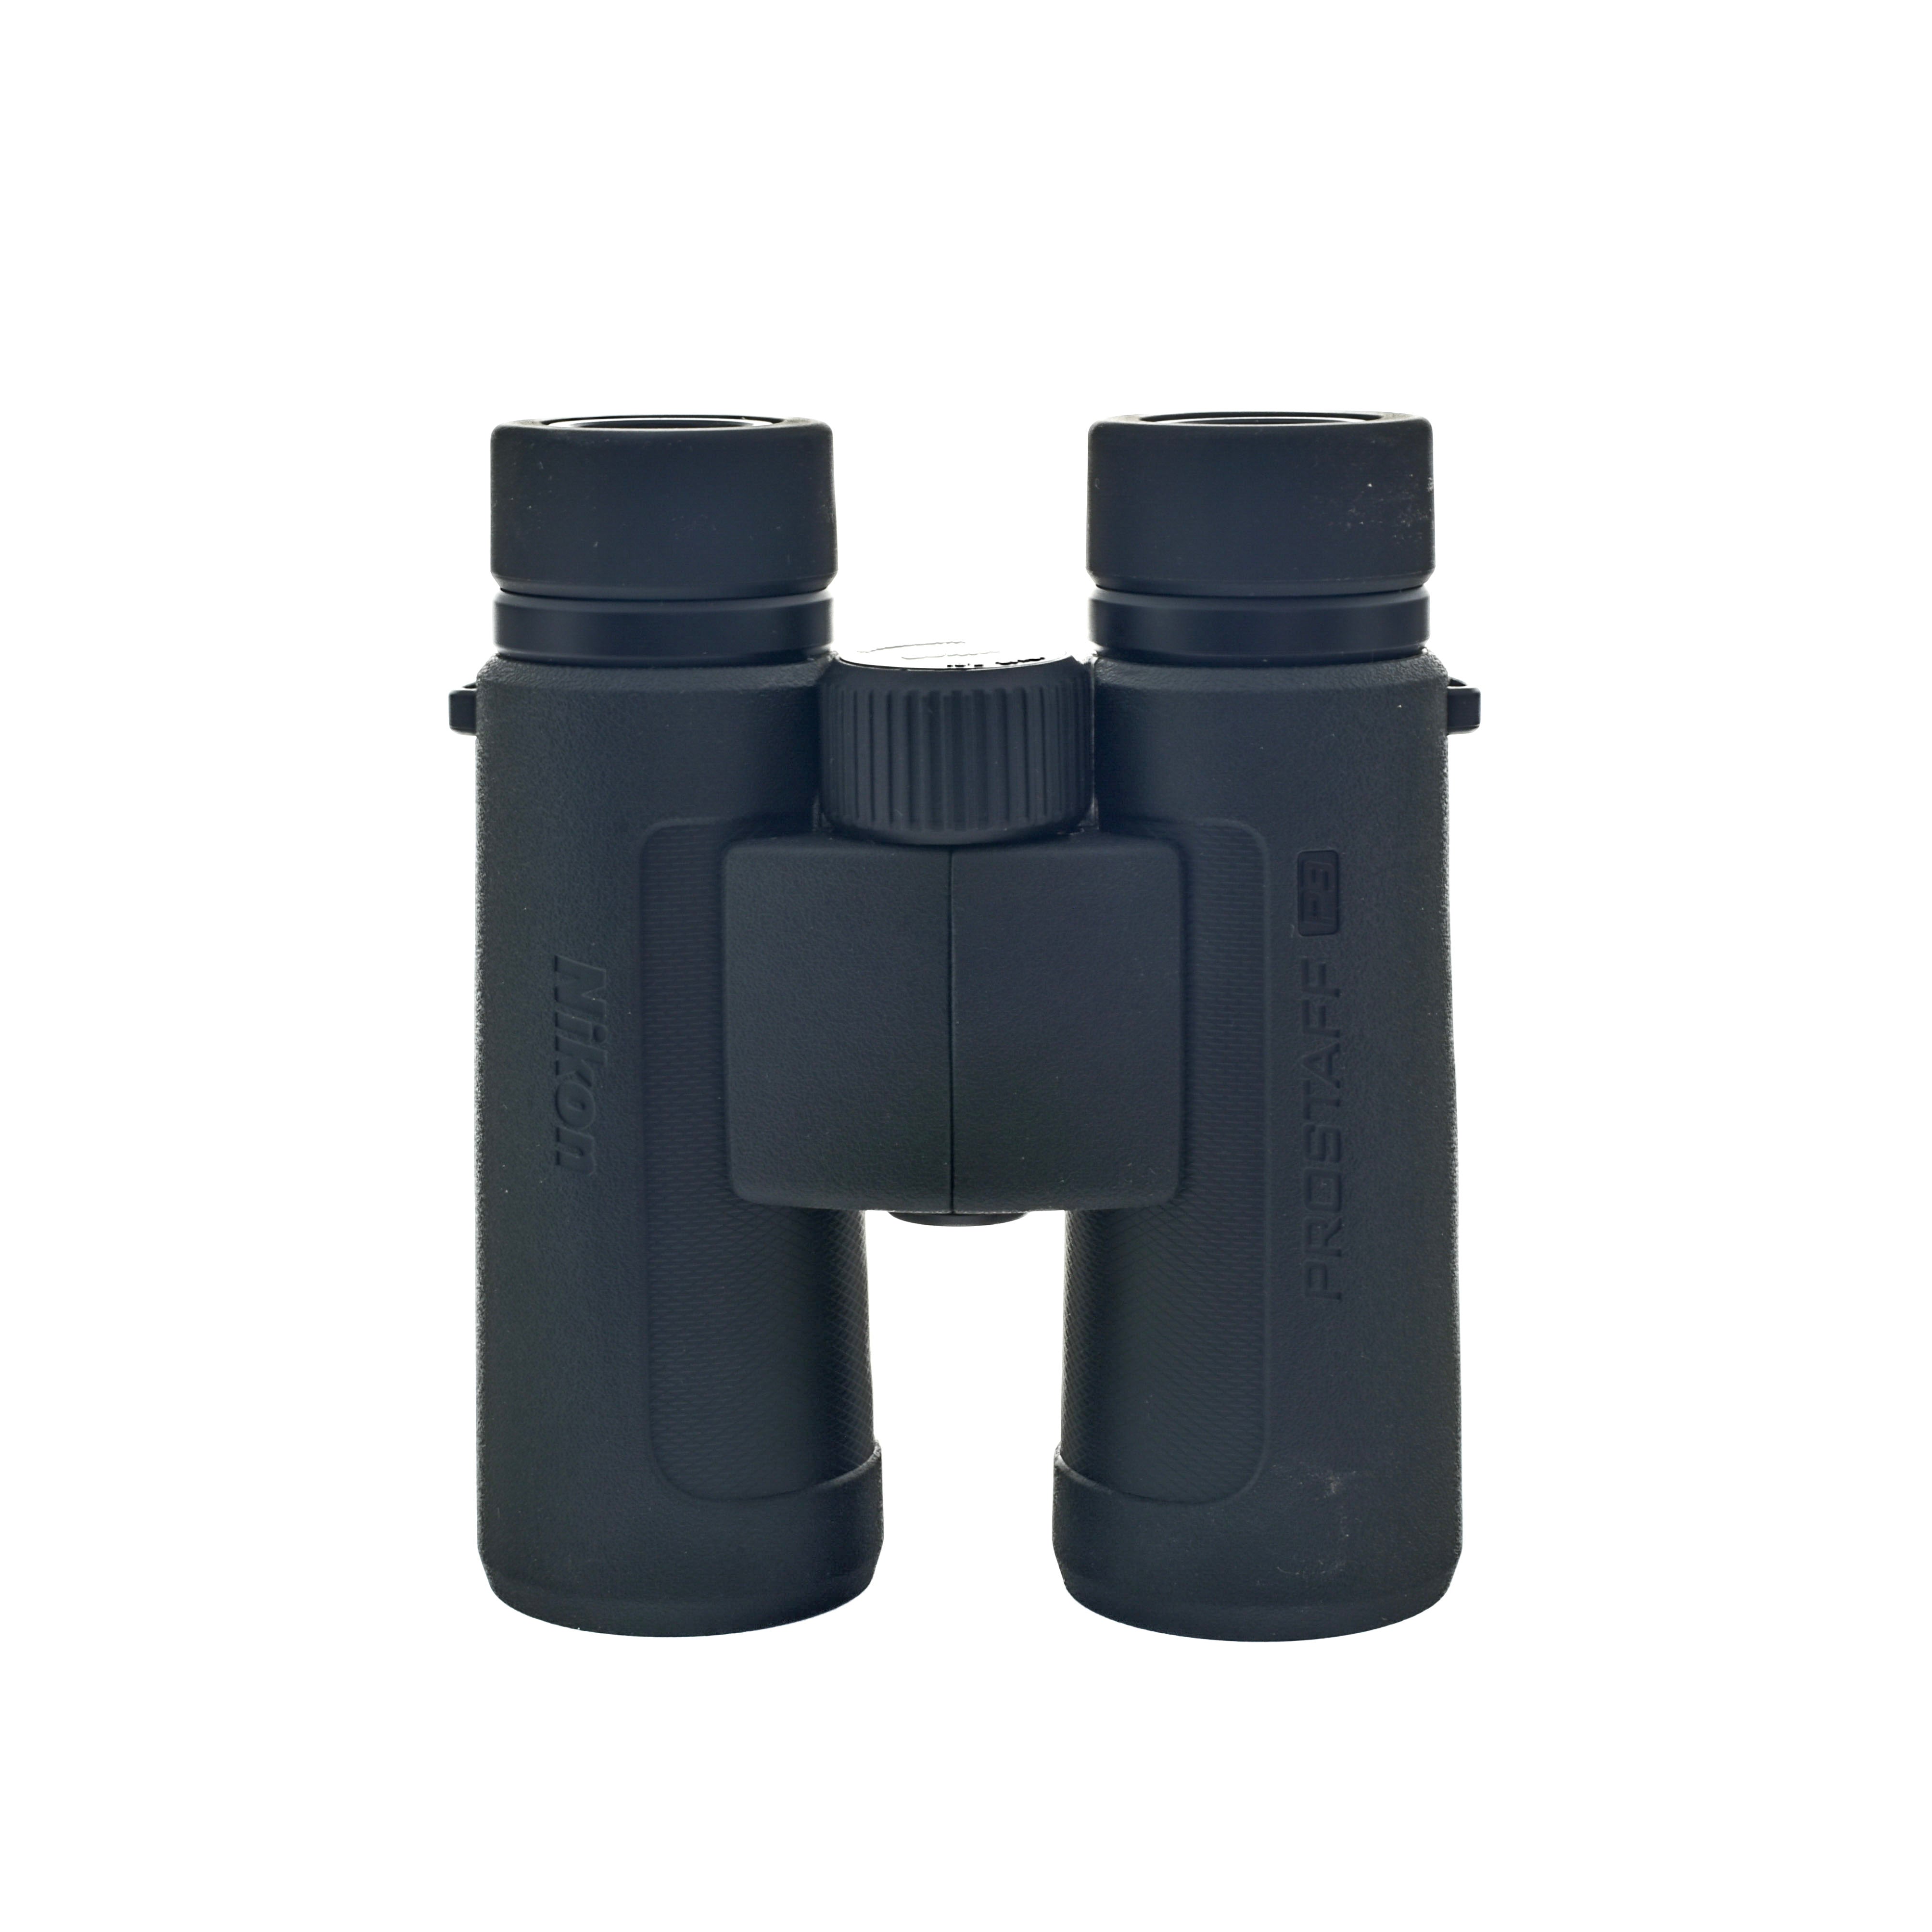 Nikon Prostaff P3 10 x 42 Binoculars (Black)